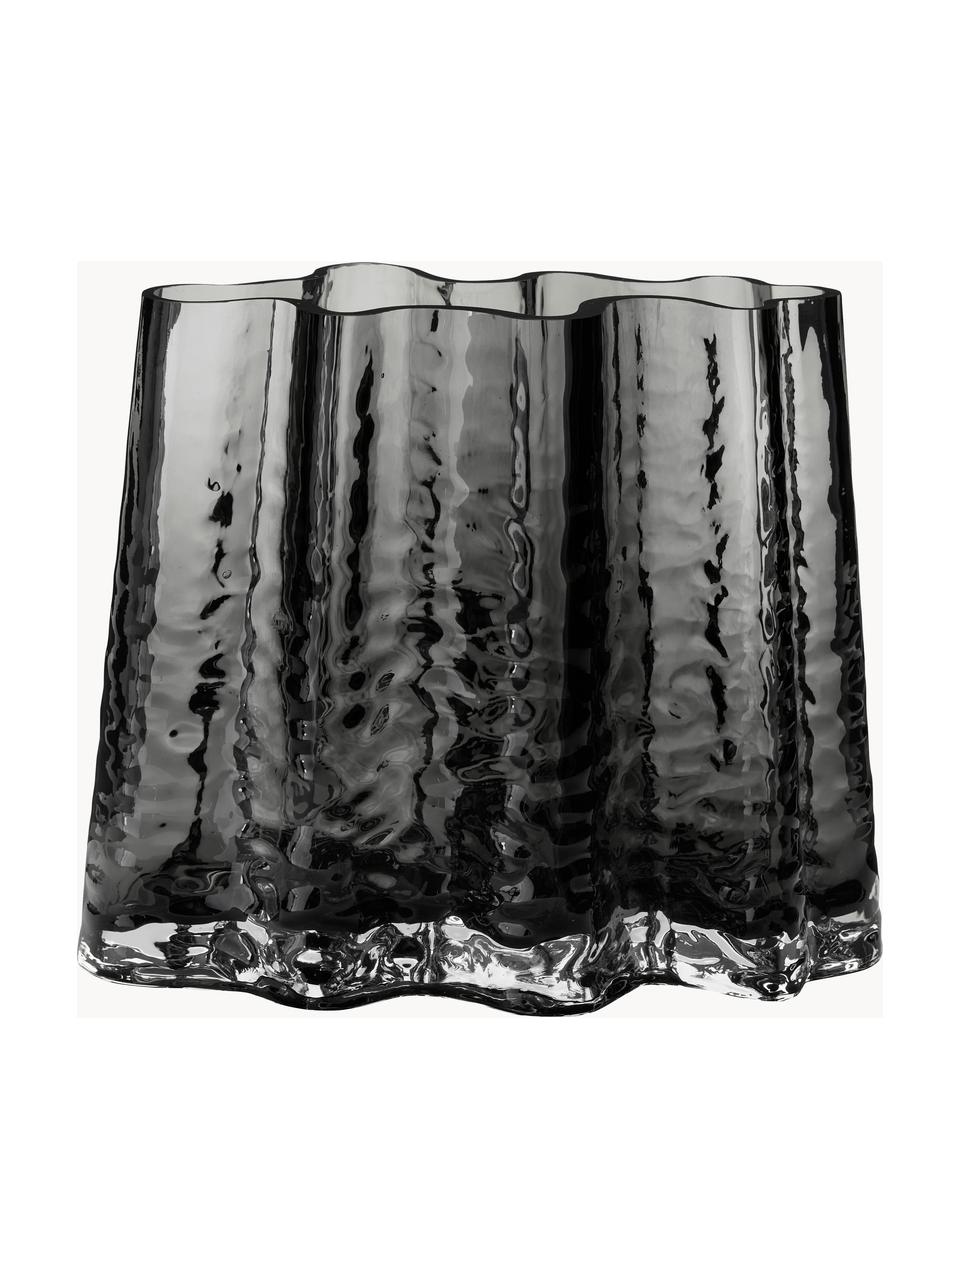 Mondgeblazen glazen vaas Gry met gestructureerde oppervlak, H 19 cm, Mondgeblazen glas, Antraciet, semi-transparant, B 24 x H 19 cm